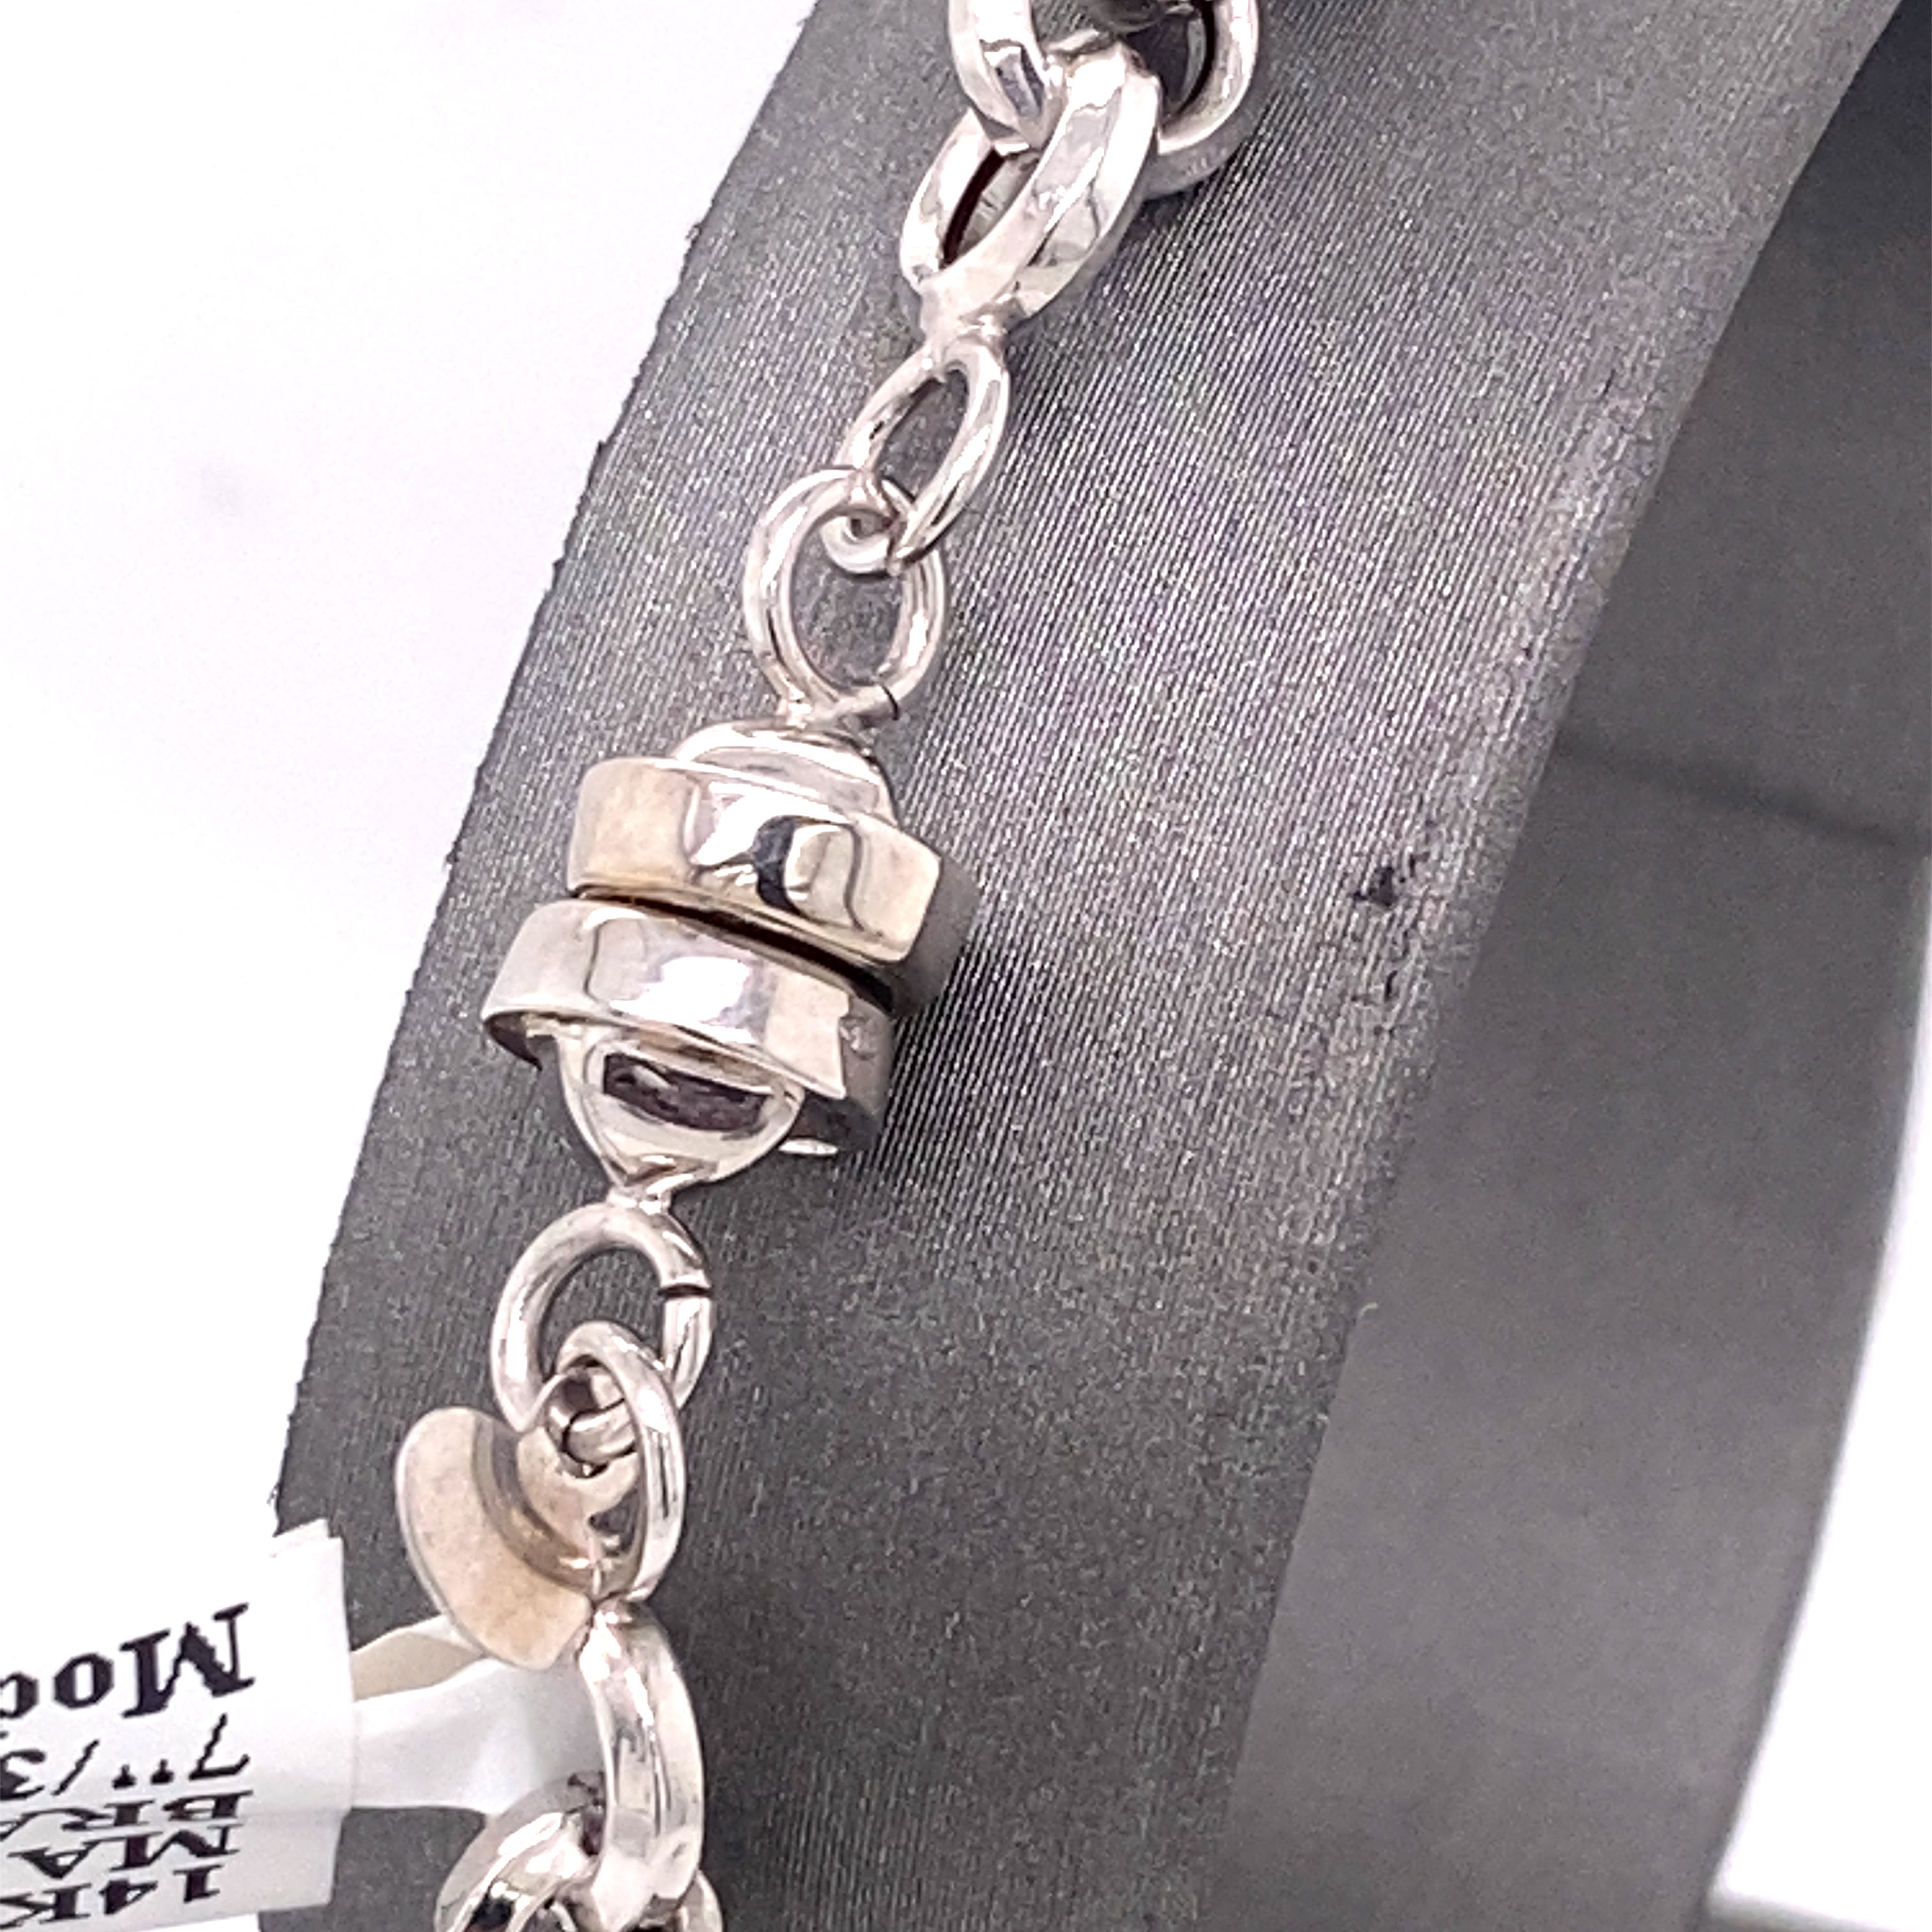 14k White Gold Ladies Chain Bracelet